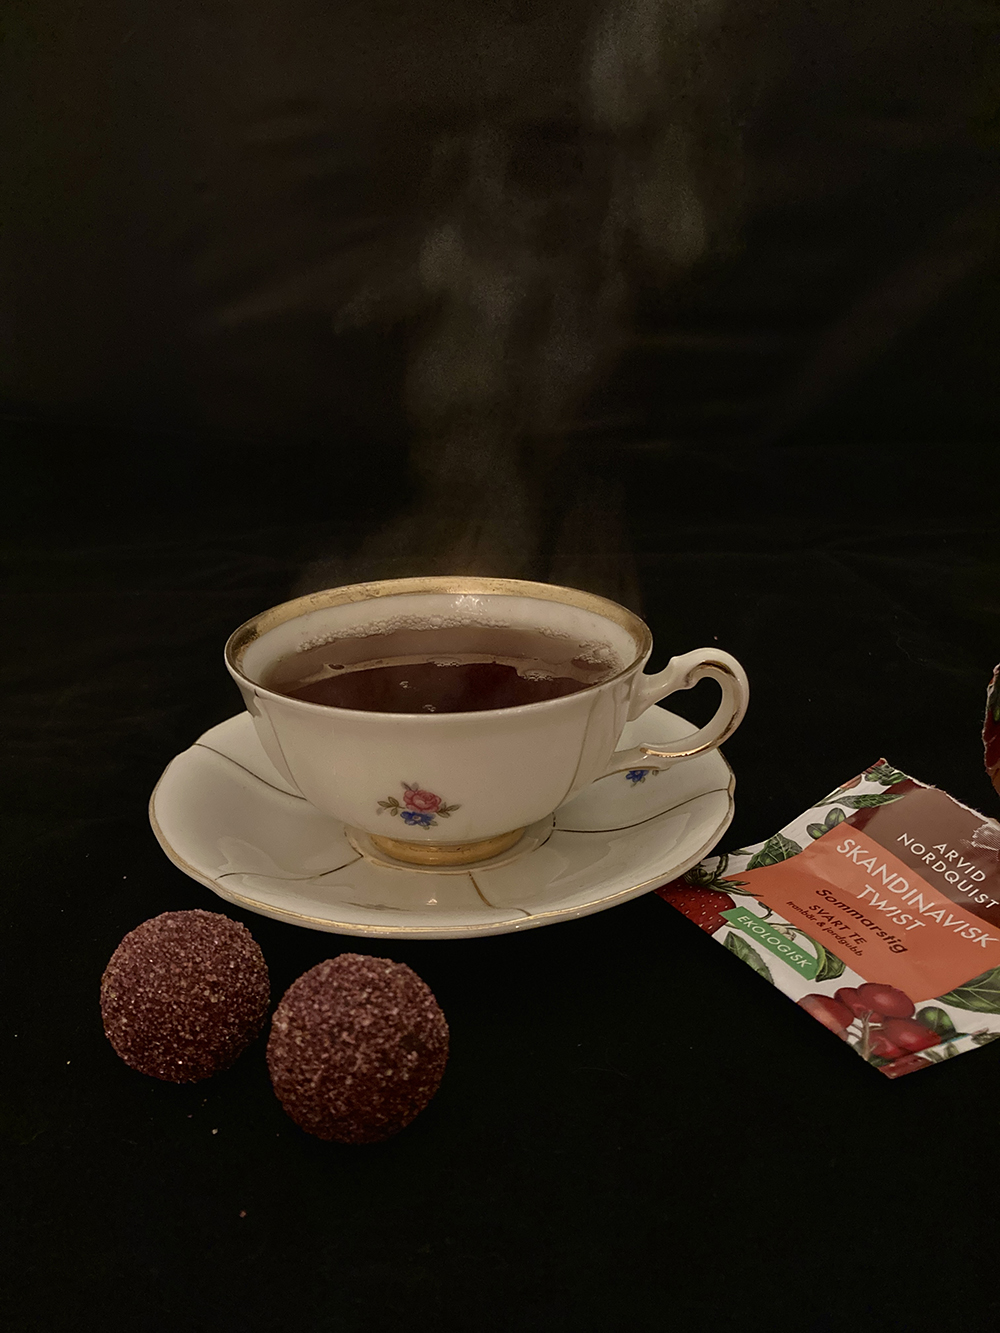 Limited edt: Praliner med te från Arvid Nordquist